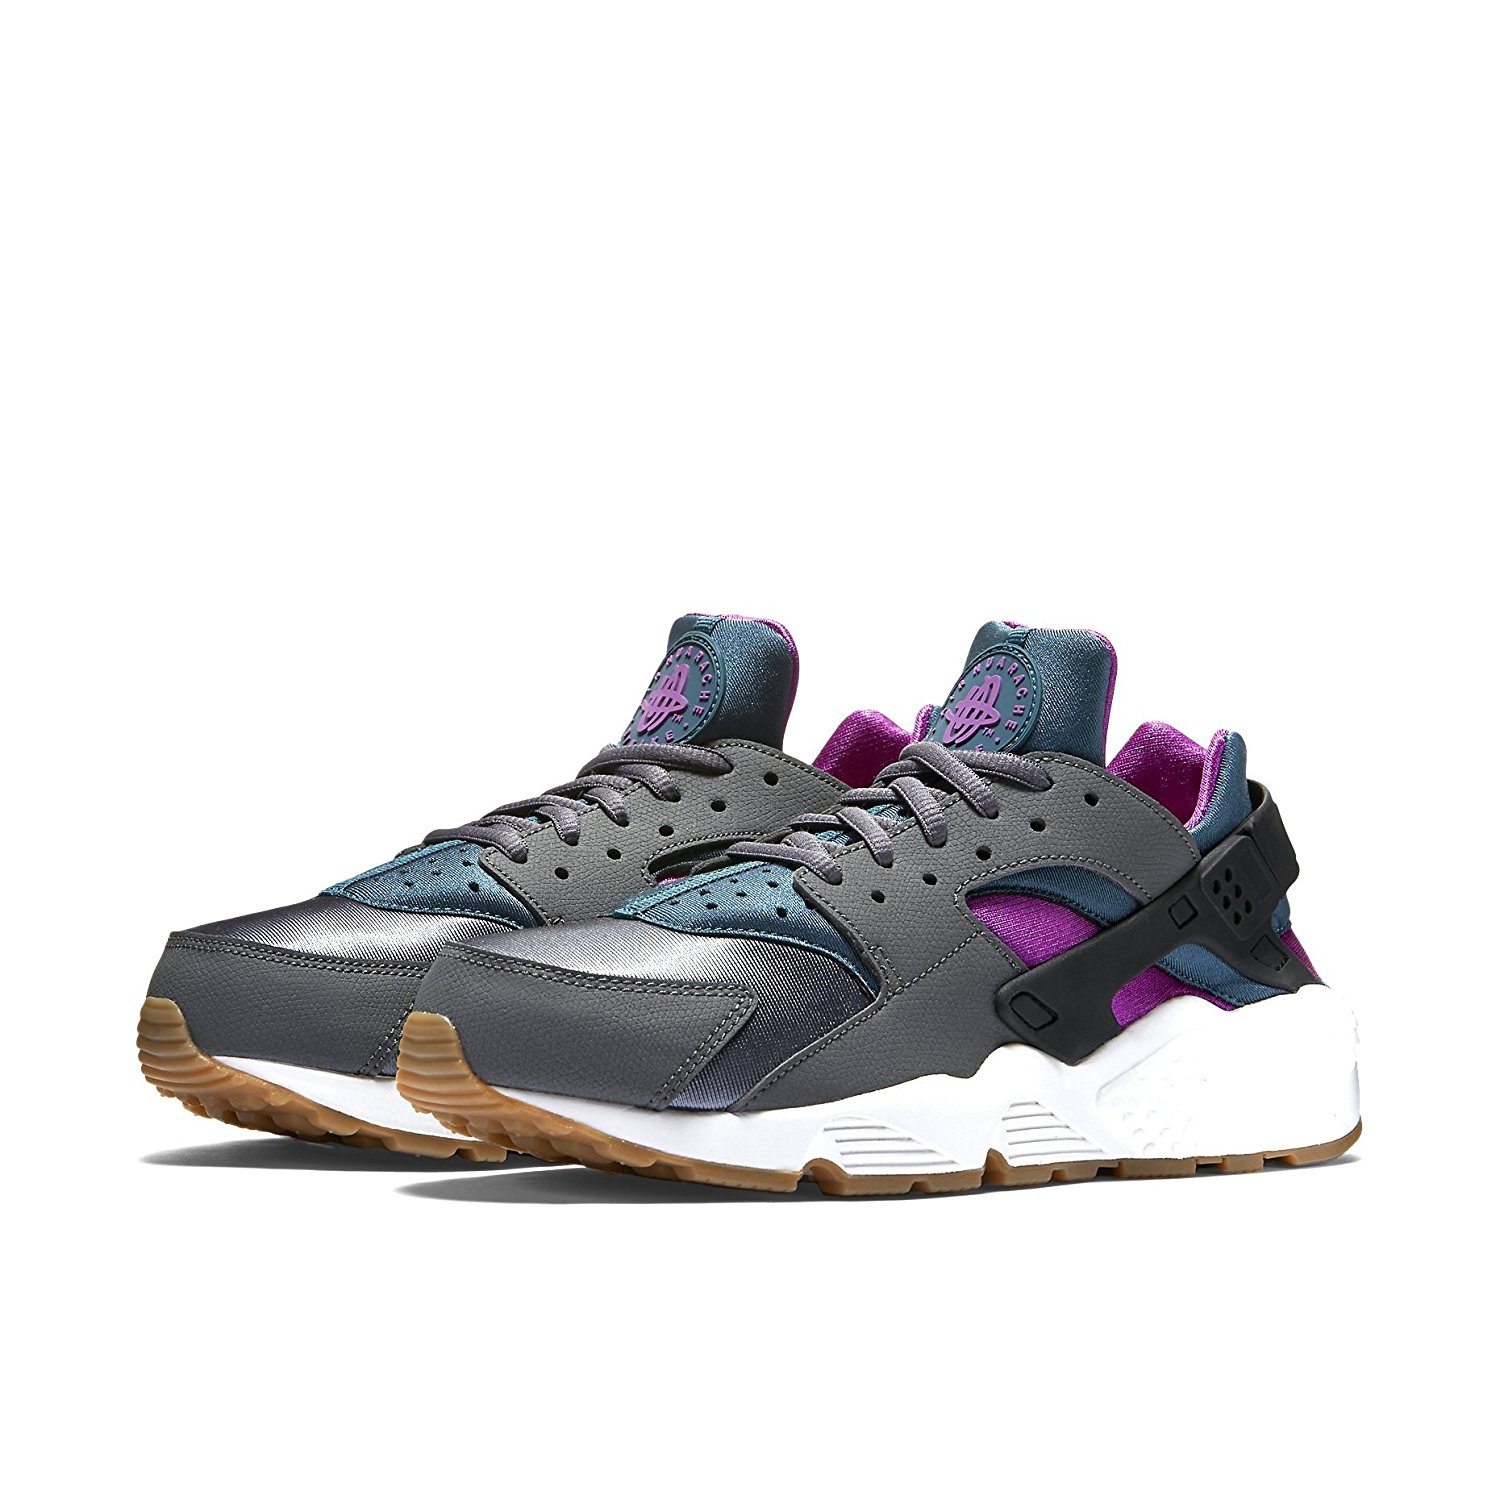 Nike Women's Air Huarache Run Running Shoe-Dark Grey/Teal/Violet - image 5 of 5